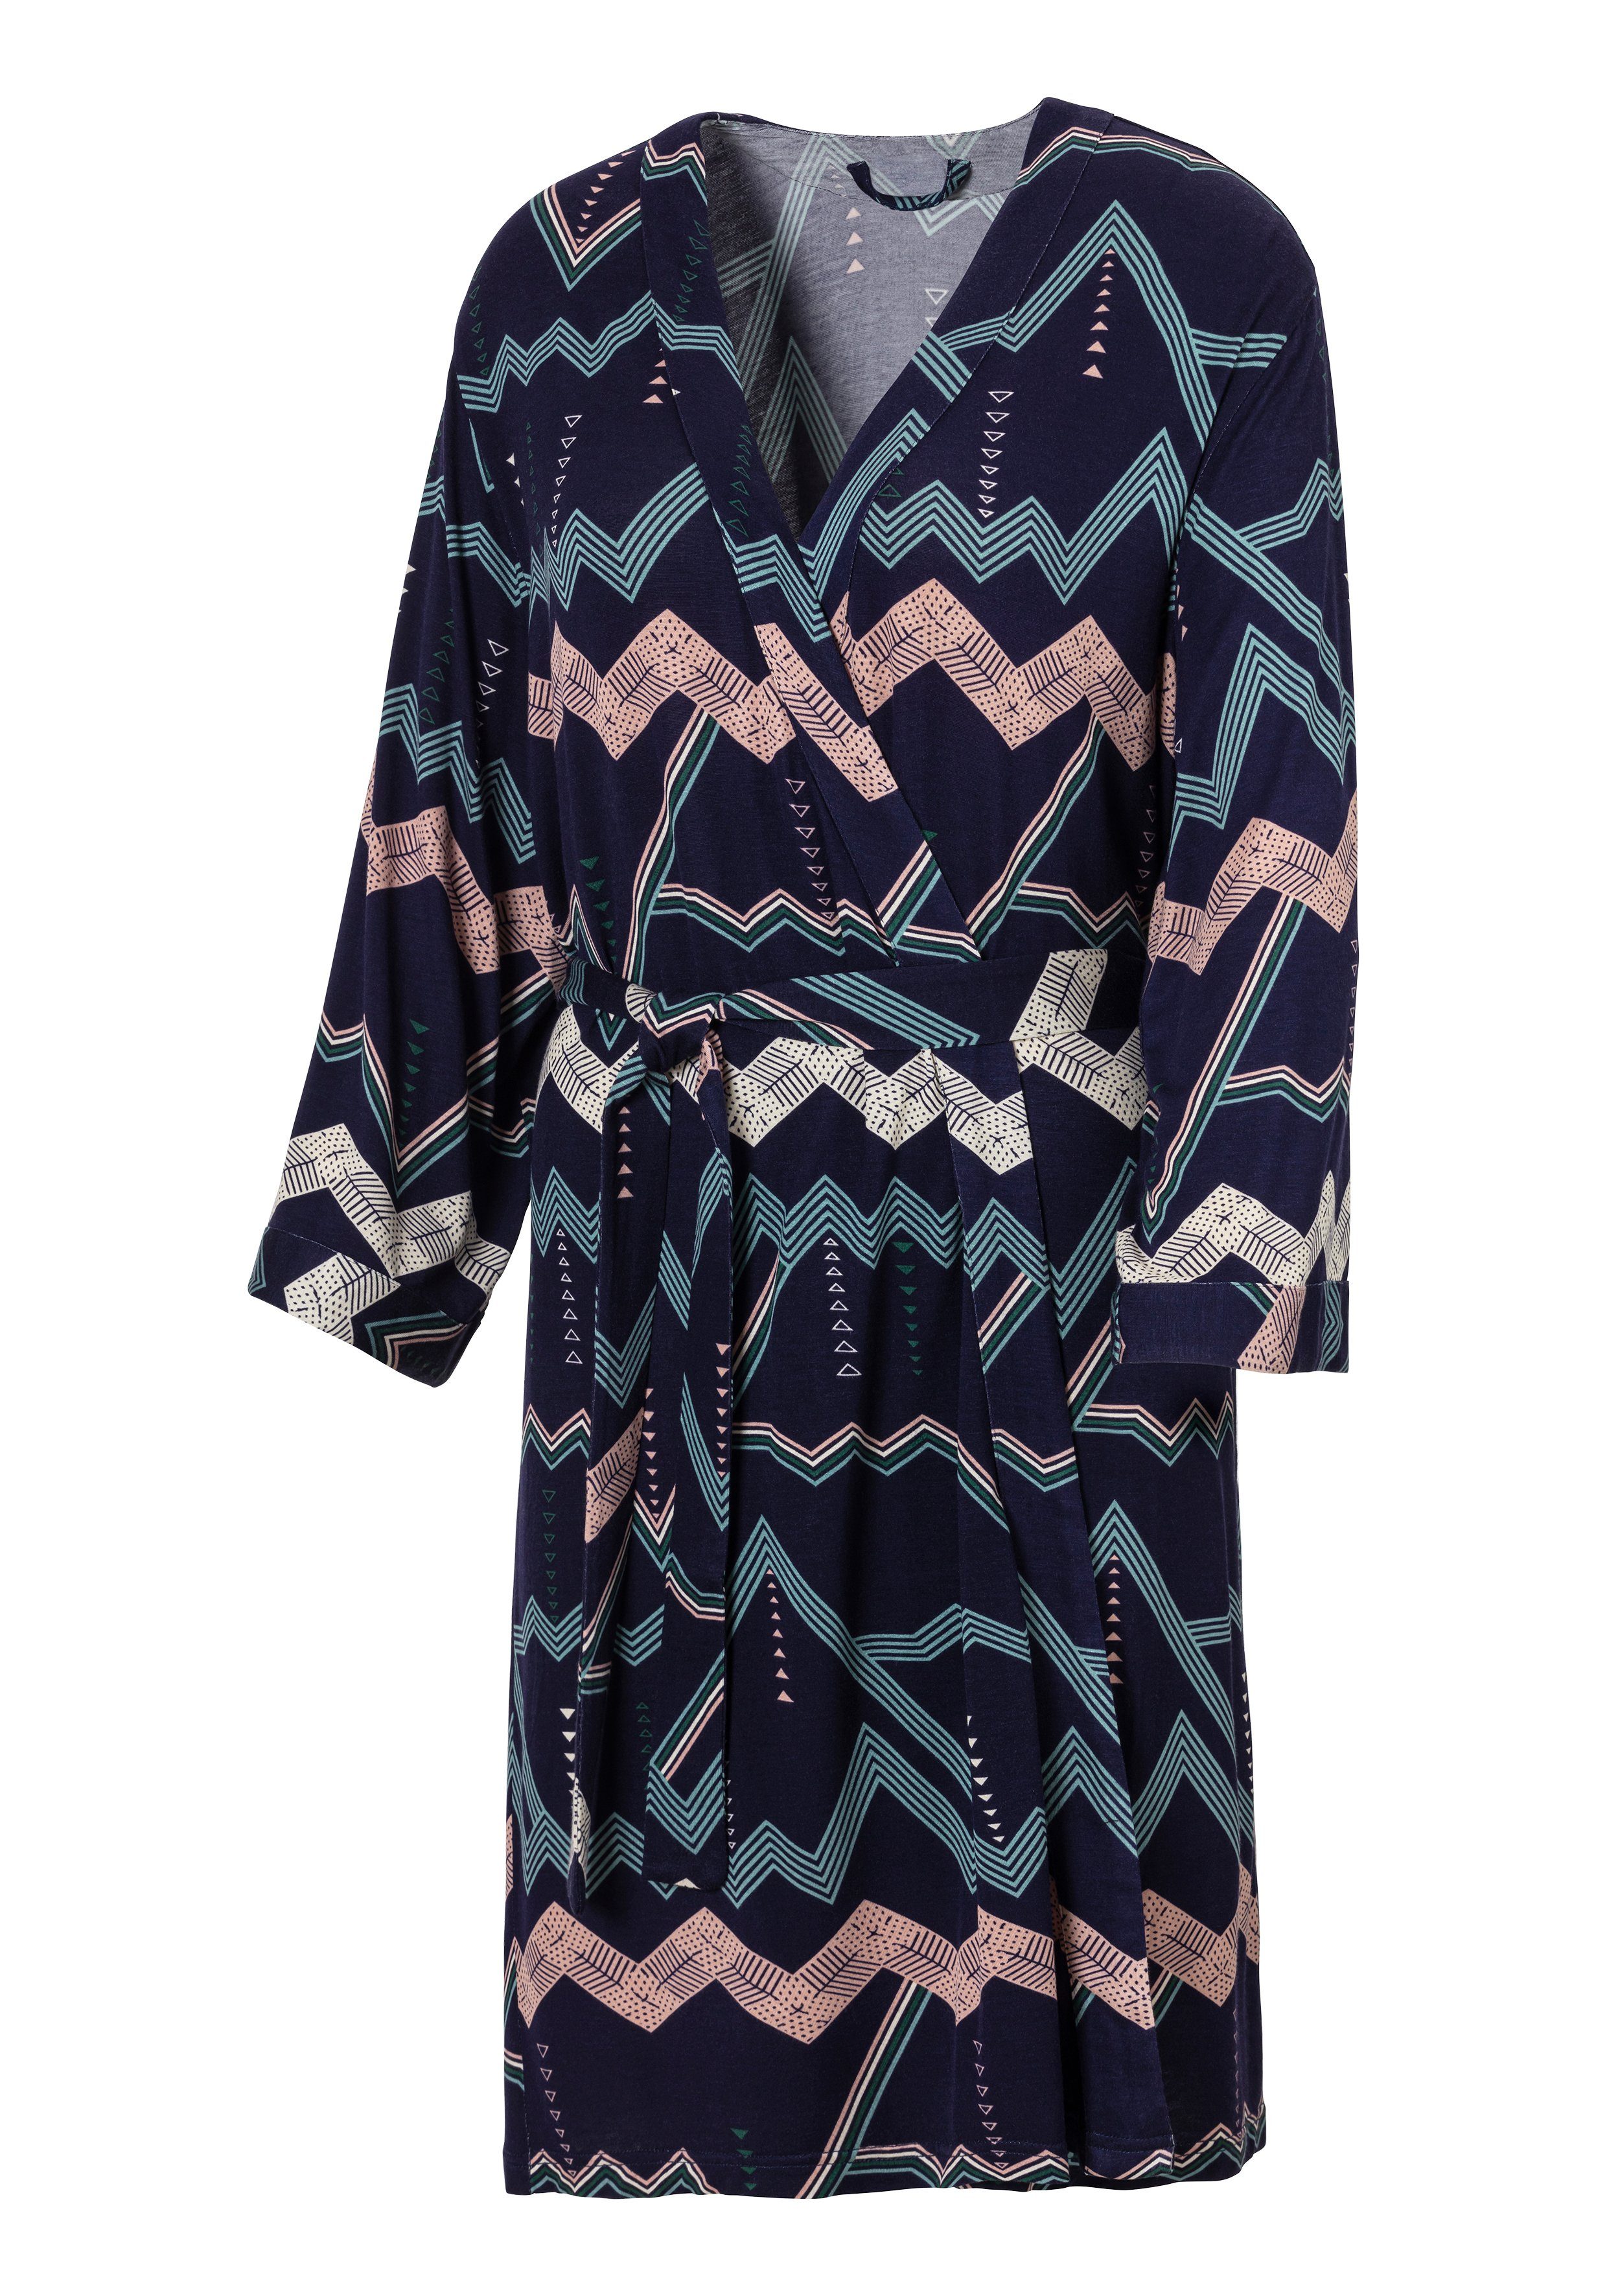 LASCANA Kimono, Kurzform, Viskose, grafischem dunkelblau Muster mit Zick-Zack Gürtel